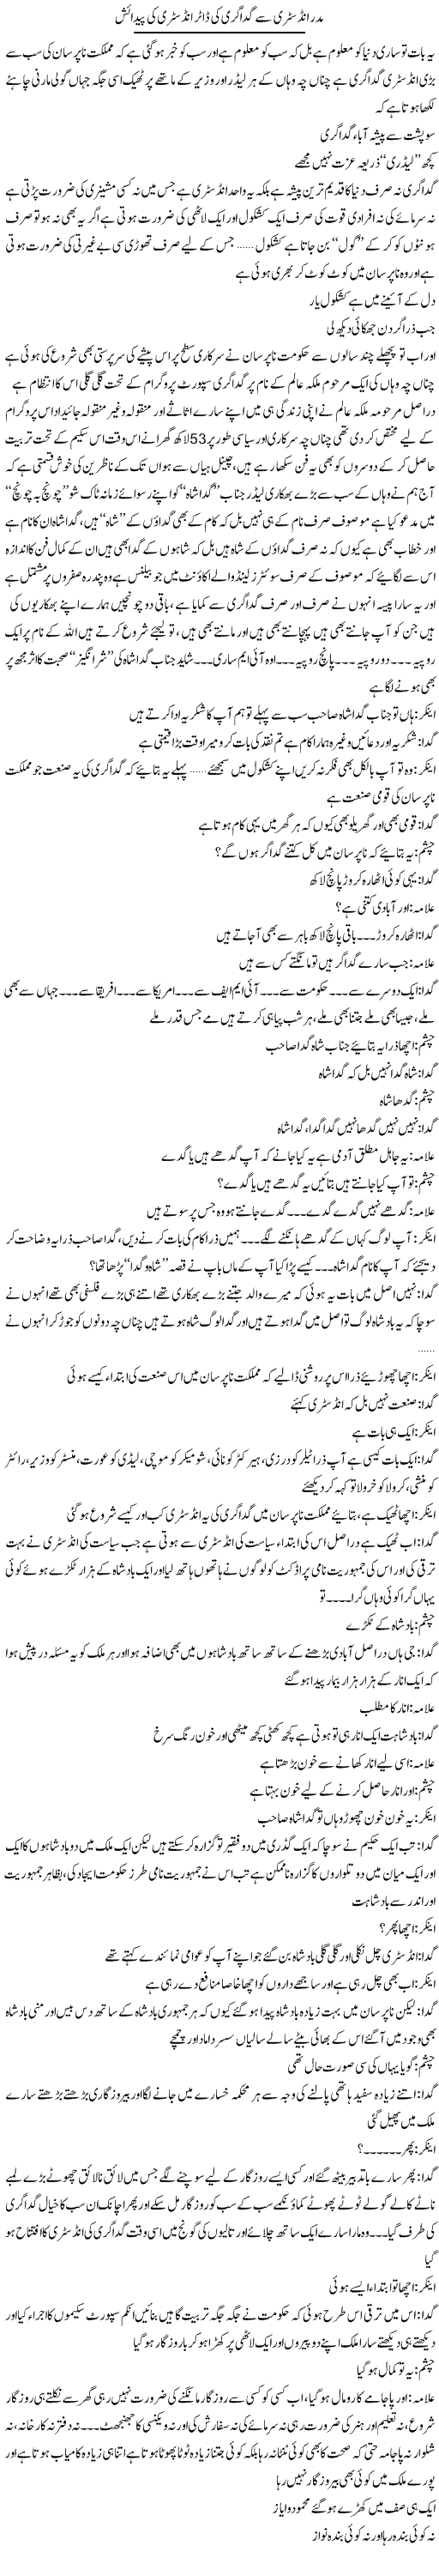 Mother Industry Say Gadagari Ki Dater Industry Ki Paidaish | Saad Ullah Jan Barq | Daily Urdu Columns